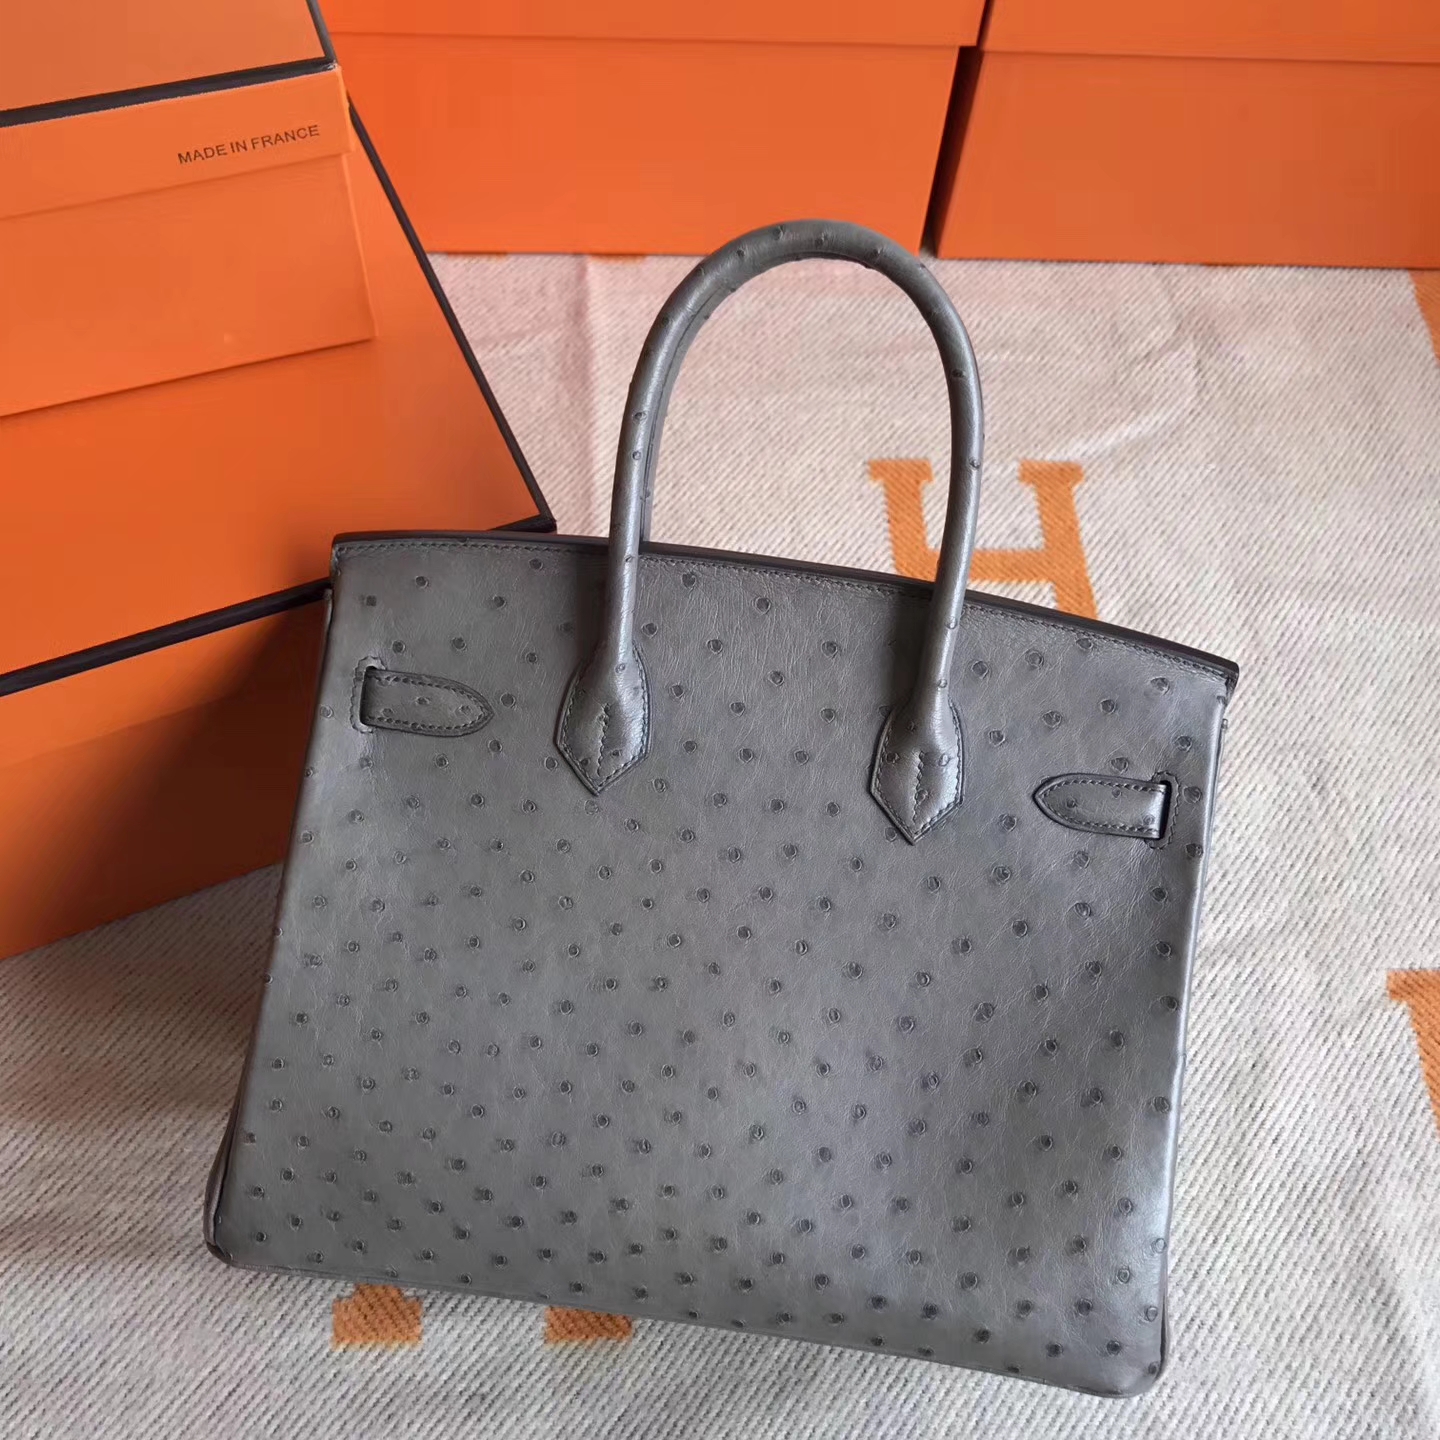 High Quality Hermes Mousse Grey France Ostrich Leather Birkin Bag 30cm